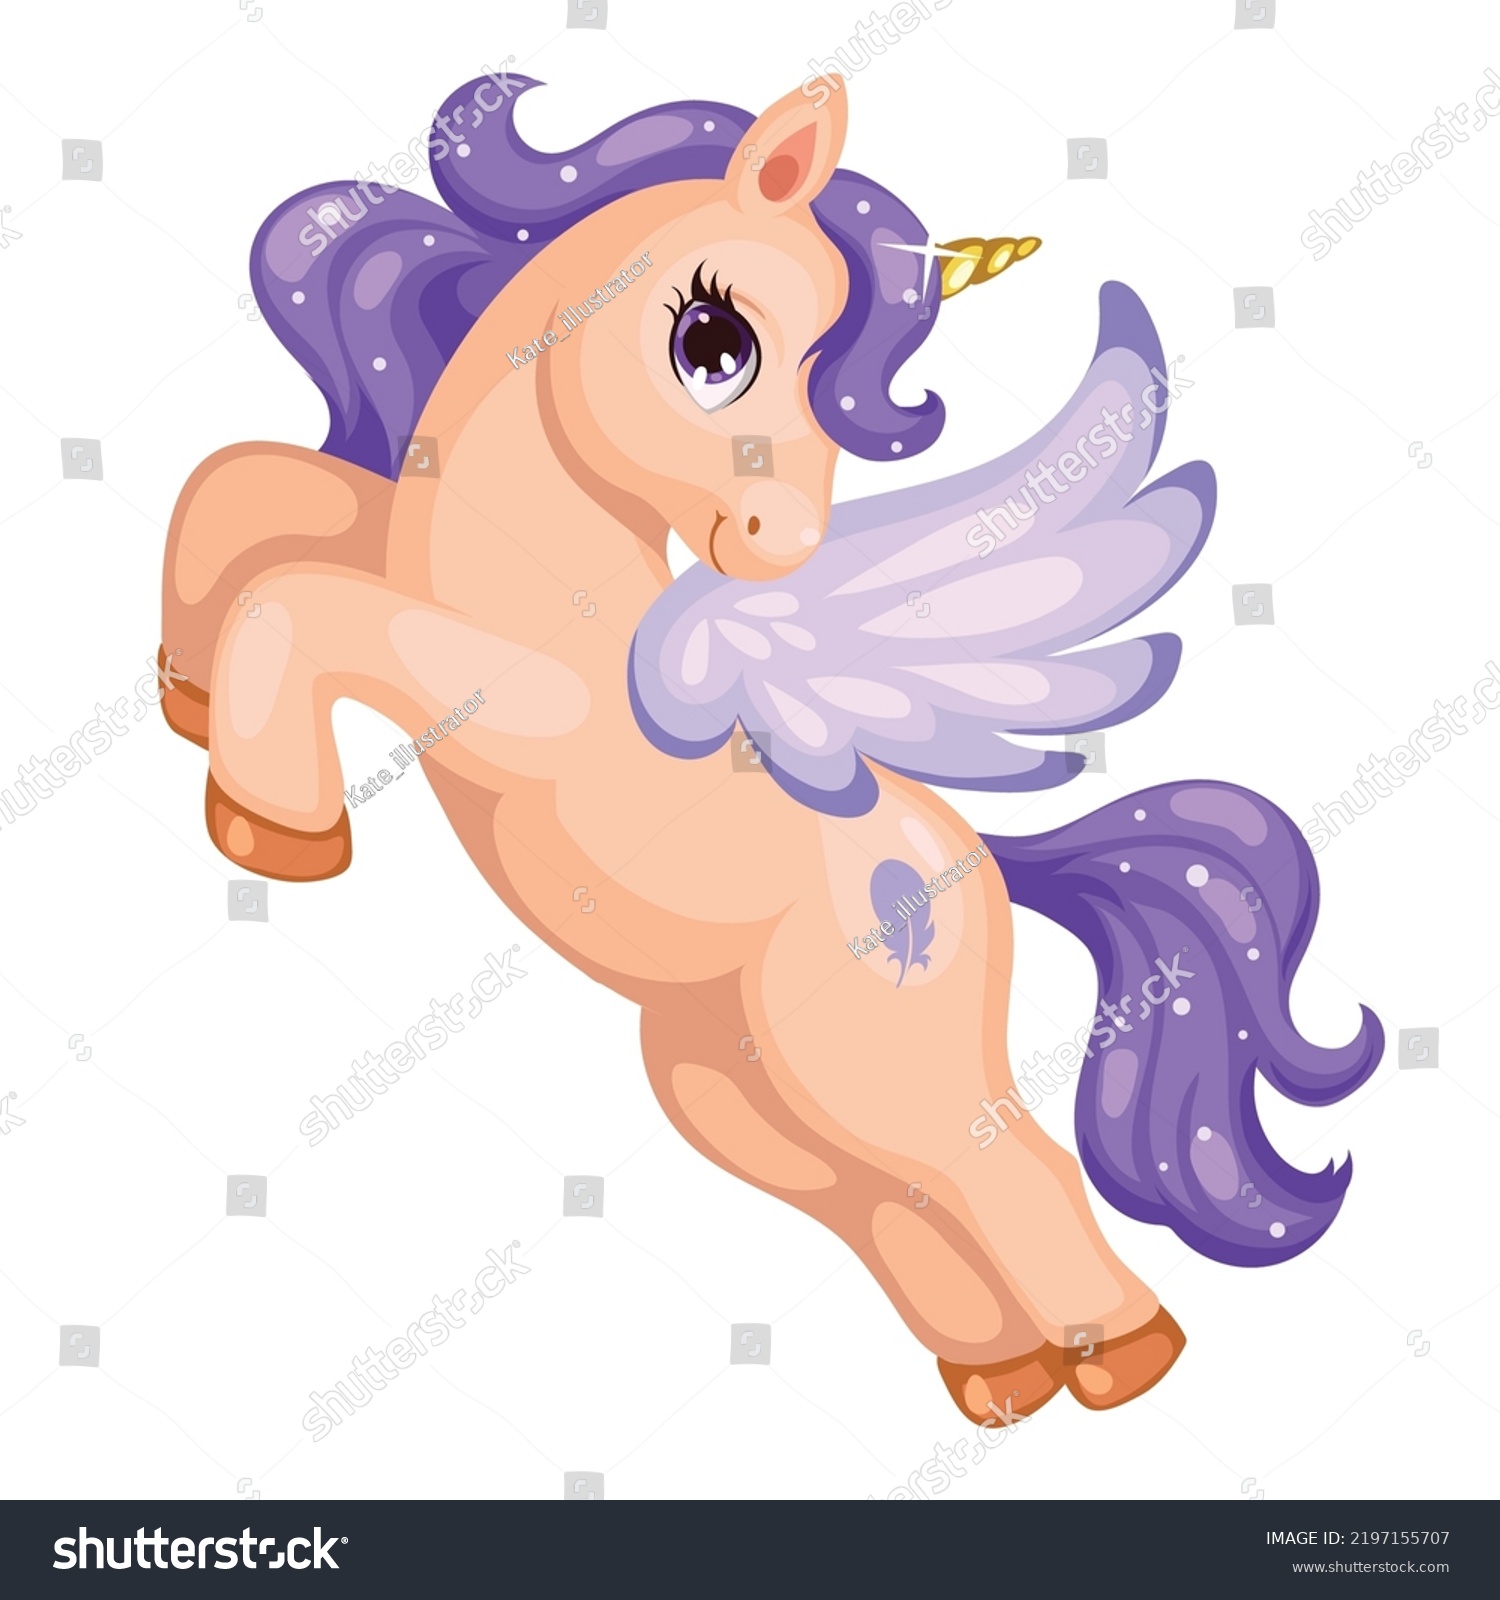 Cute Cartoon Illustration Unicorn Beautiful Flying Stock Vector Royalty Free 2197155707 0451